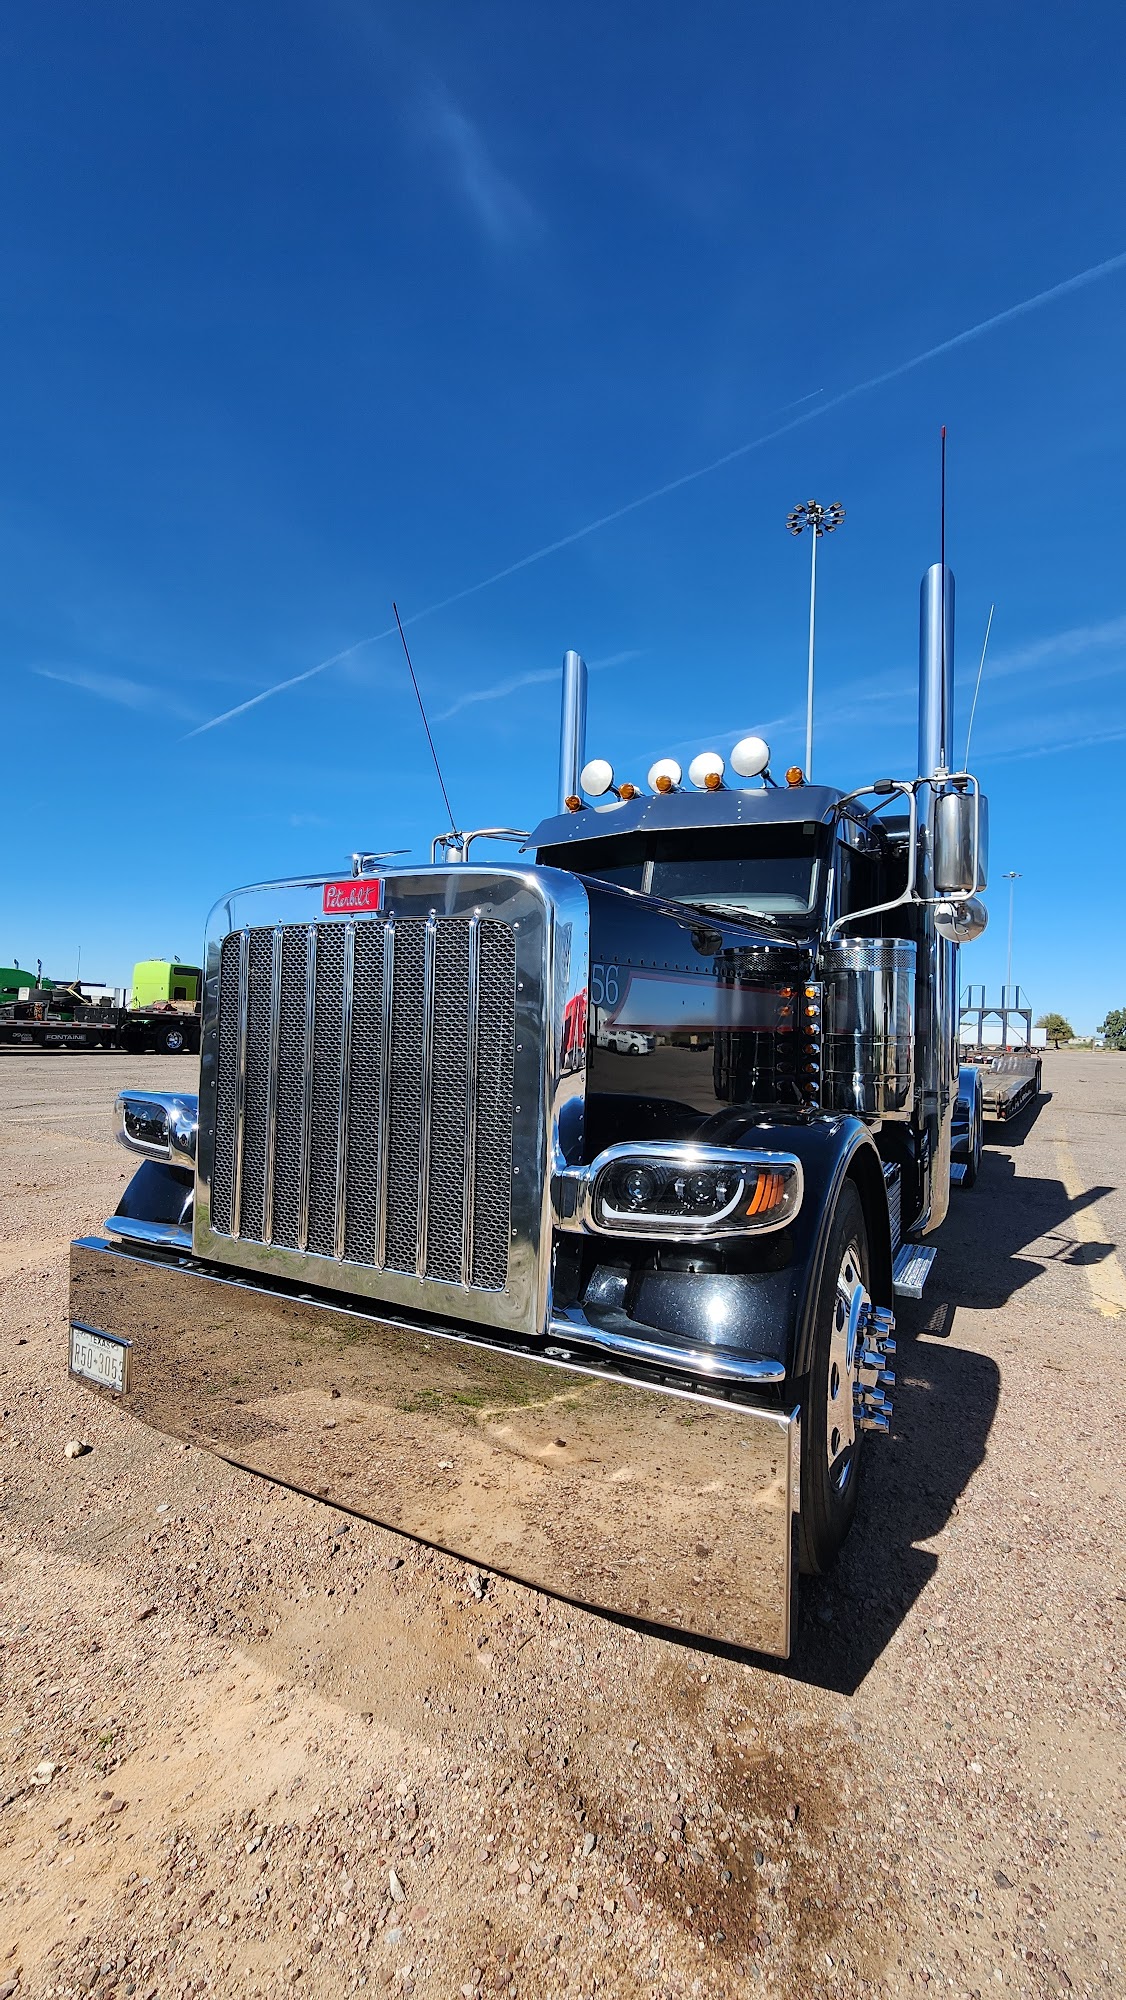 Shine-a-truck 3825 W Cowboy Trail, Eloy Arizona 85131